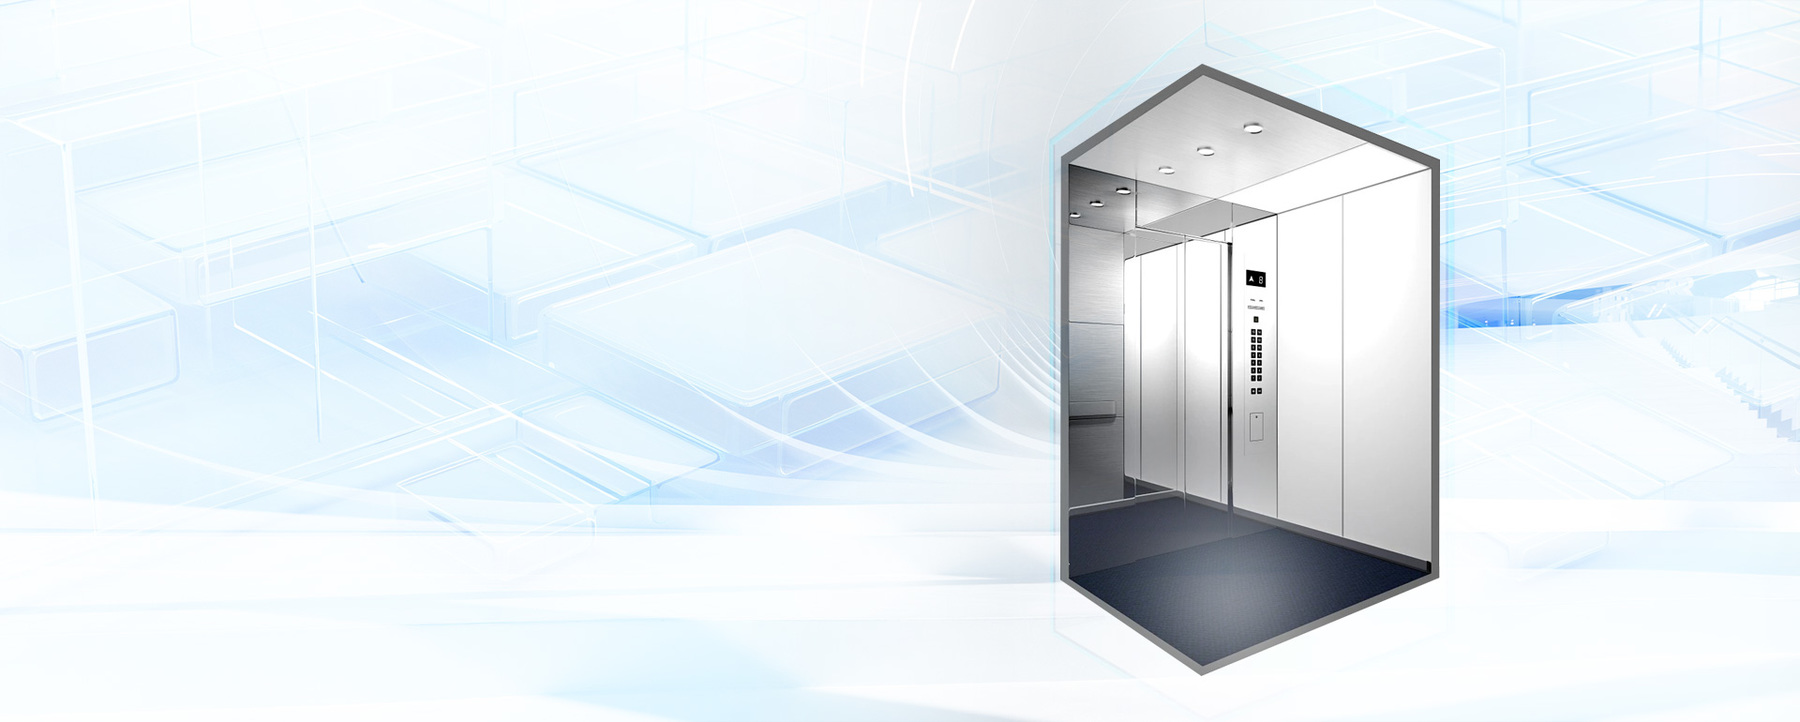 AoNuo Elevator Intelligent manufacturing digitization